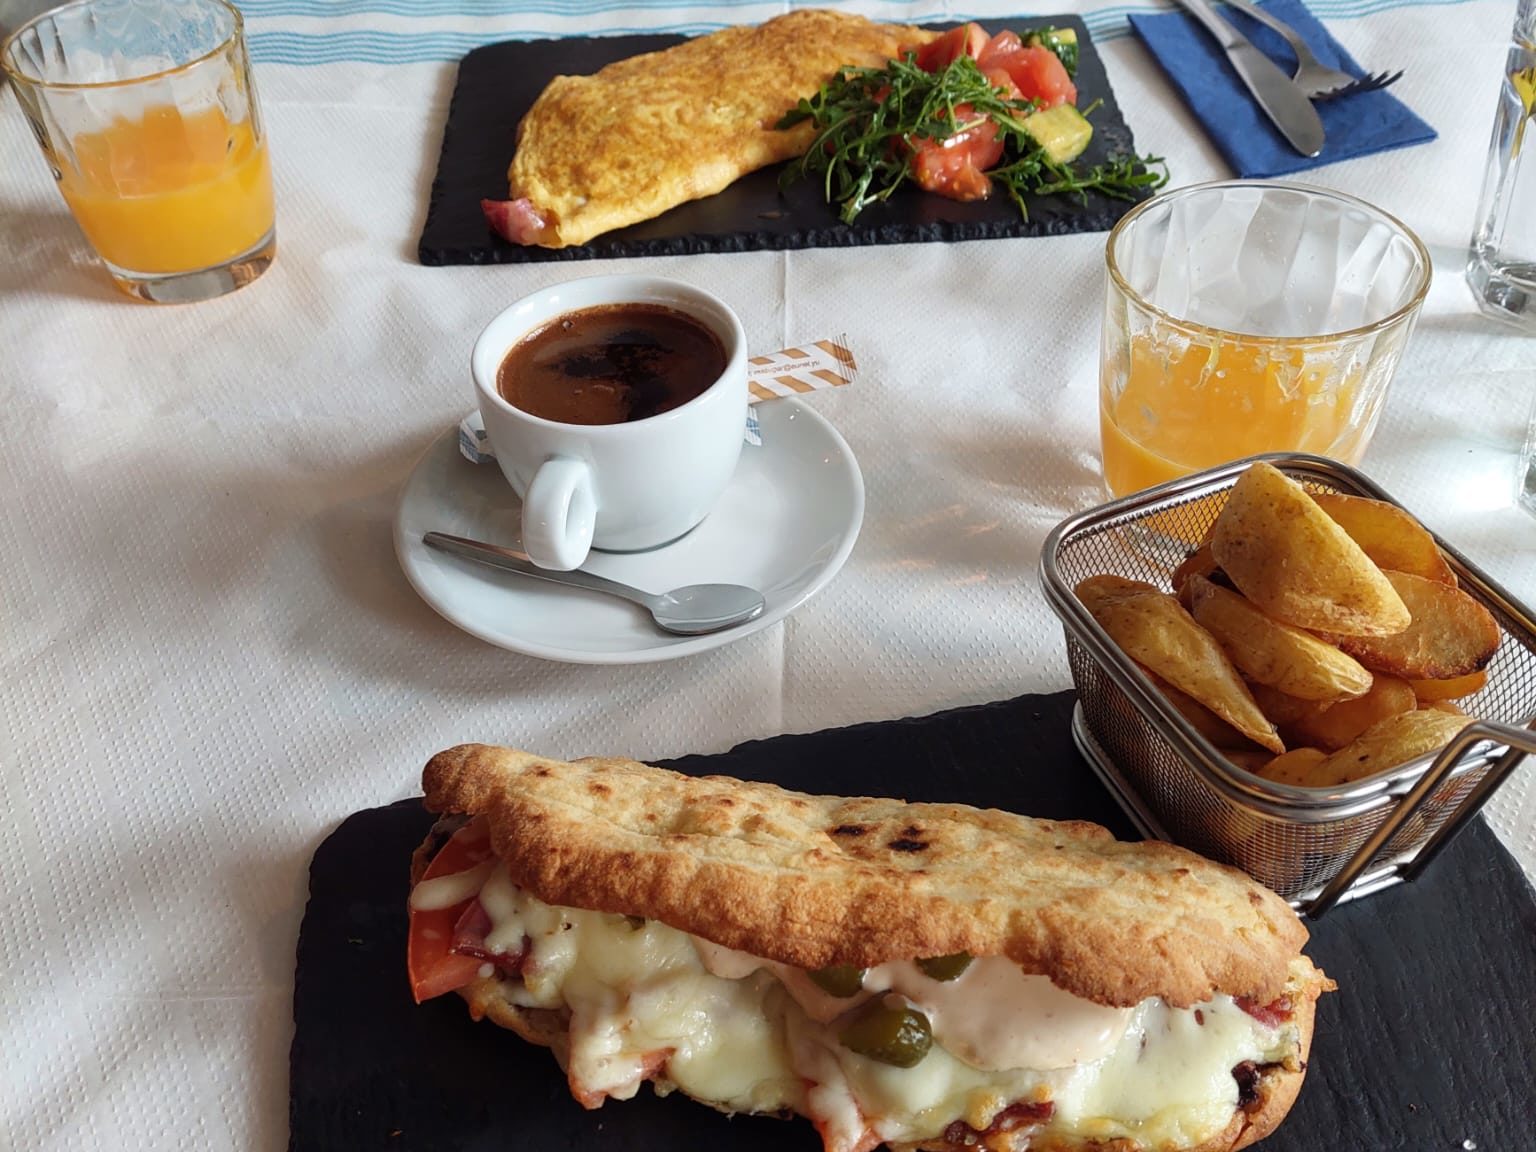 Breakfast at Taverna Piatakia, one of the breakfast spots in Zemun